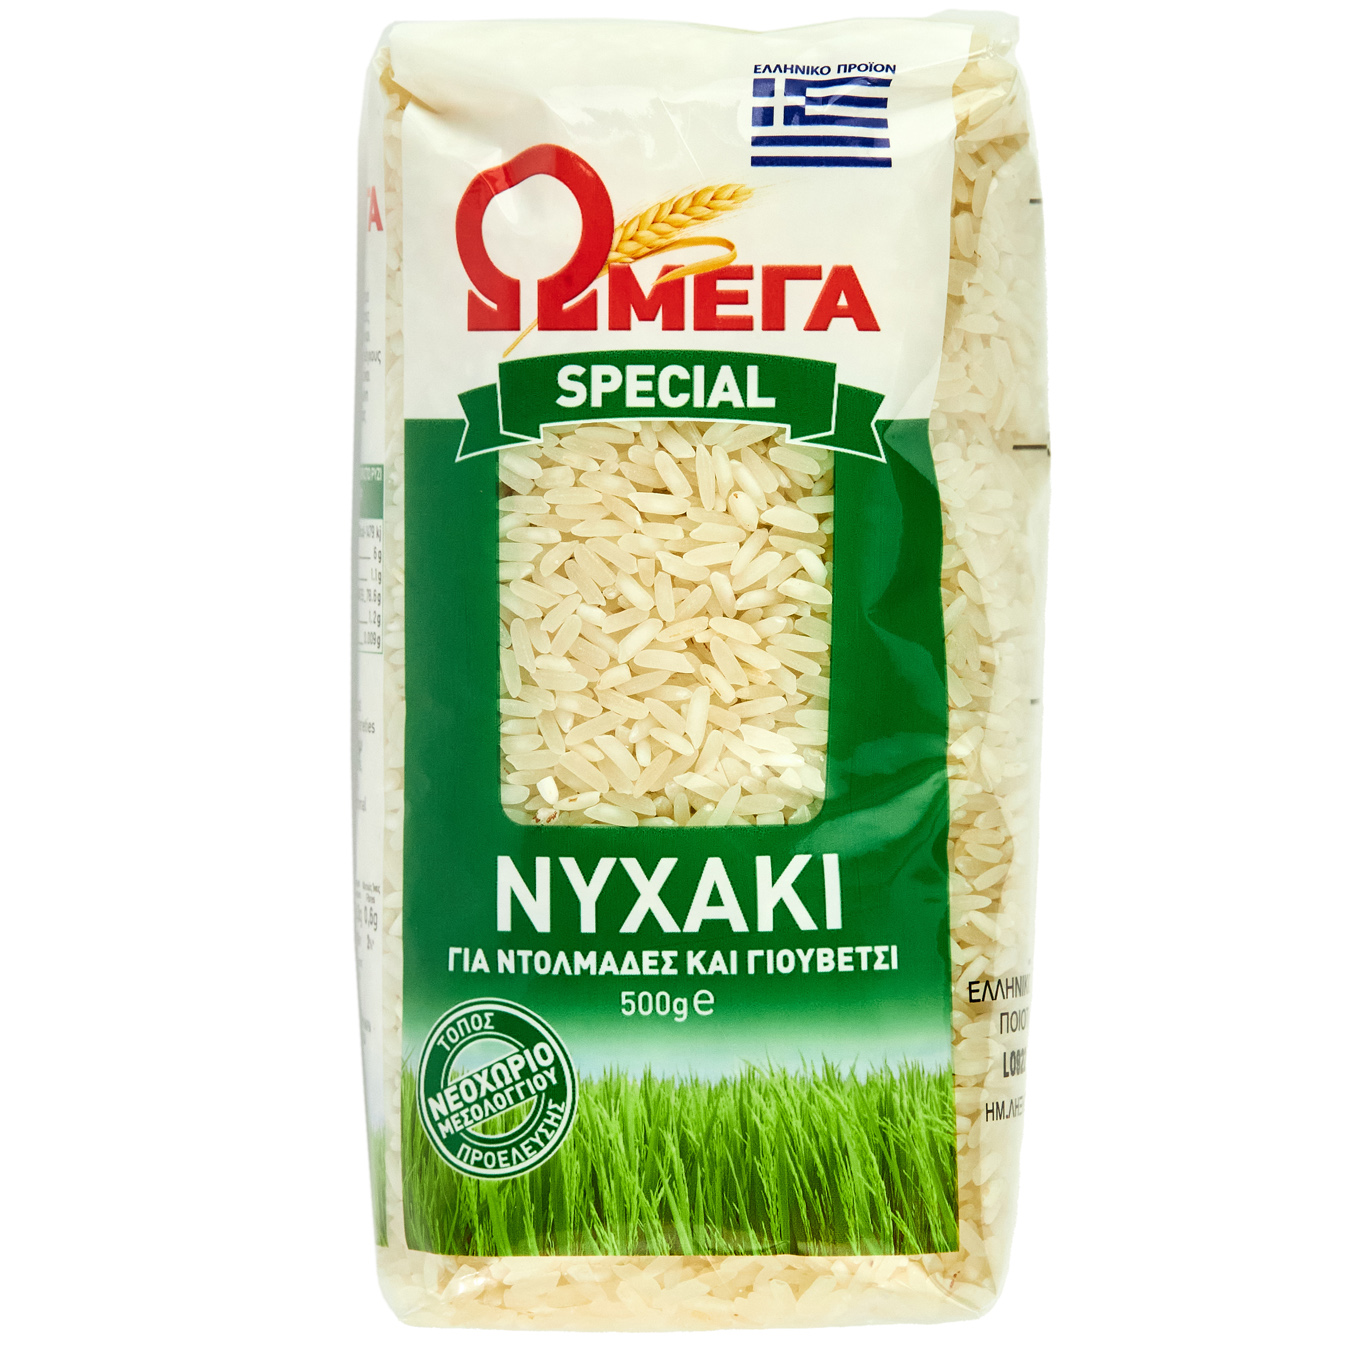 Nichaki Omega long rice 500g